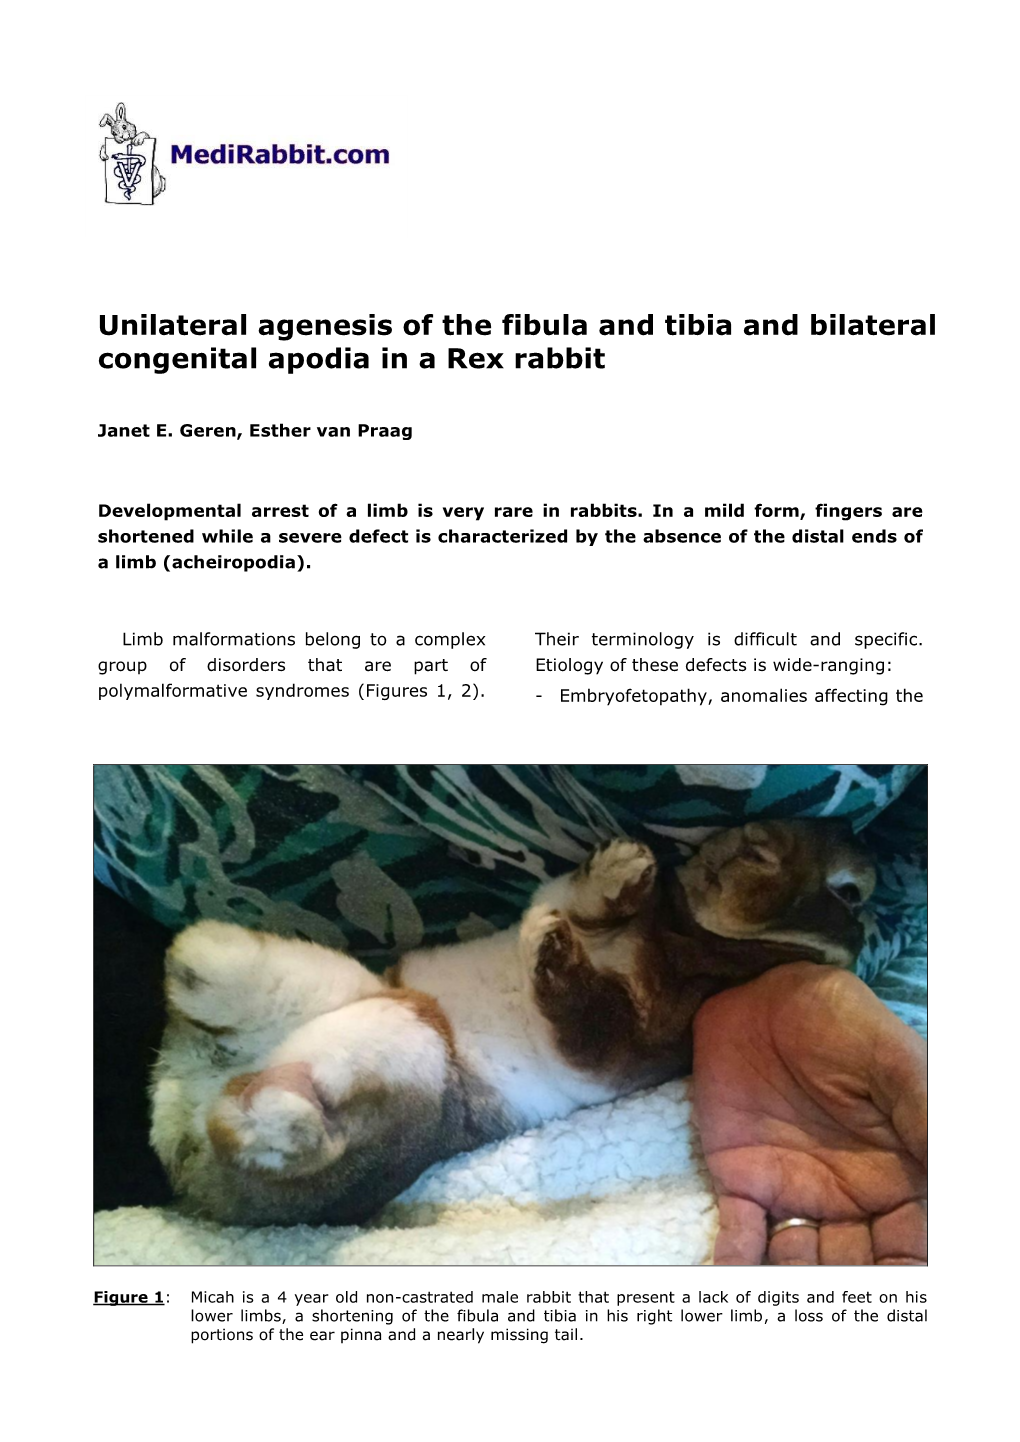 Unilateral Agenesis of the Fibula and Tibia and Bilateral Congenital Apodia in a Rex Rabbit